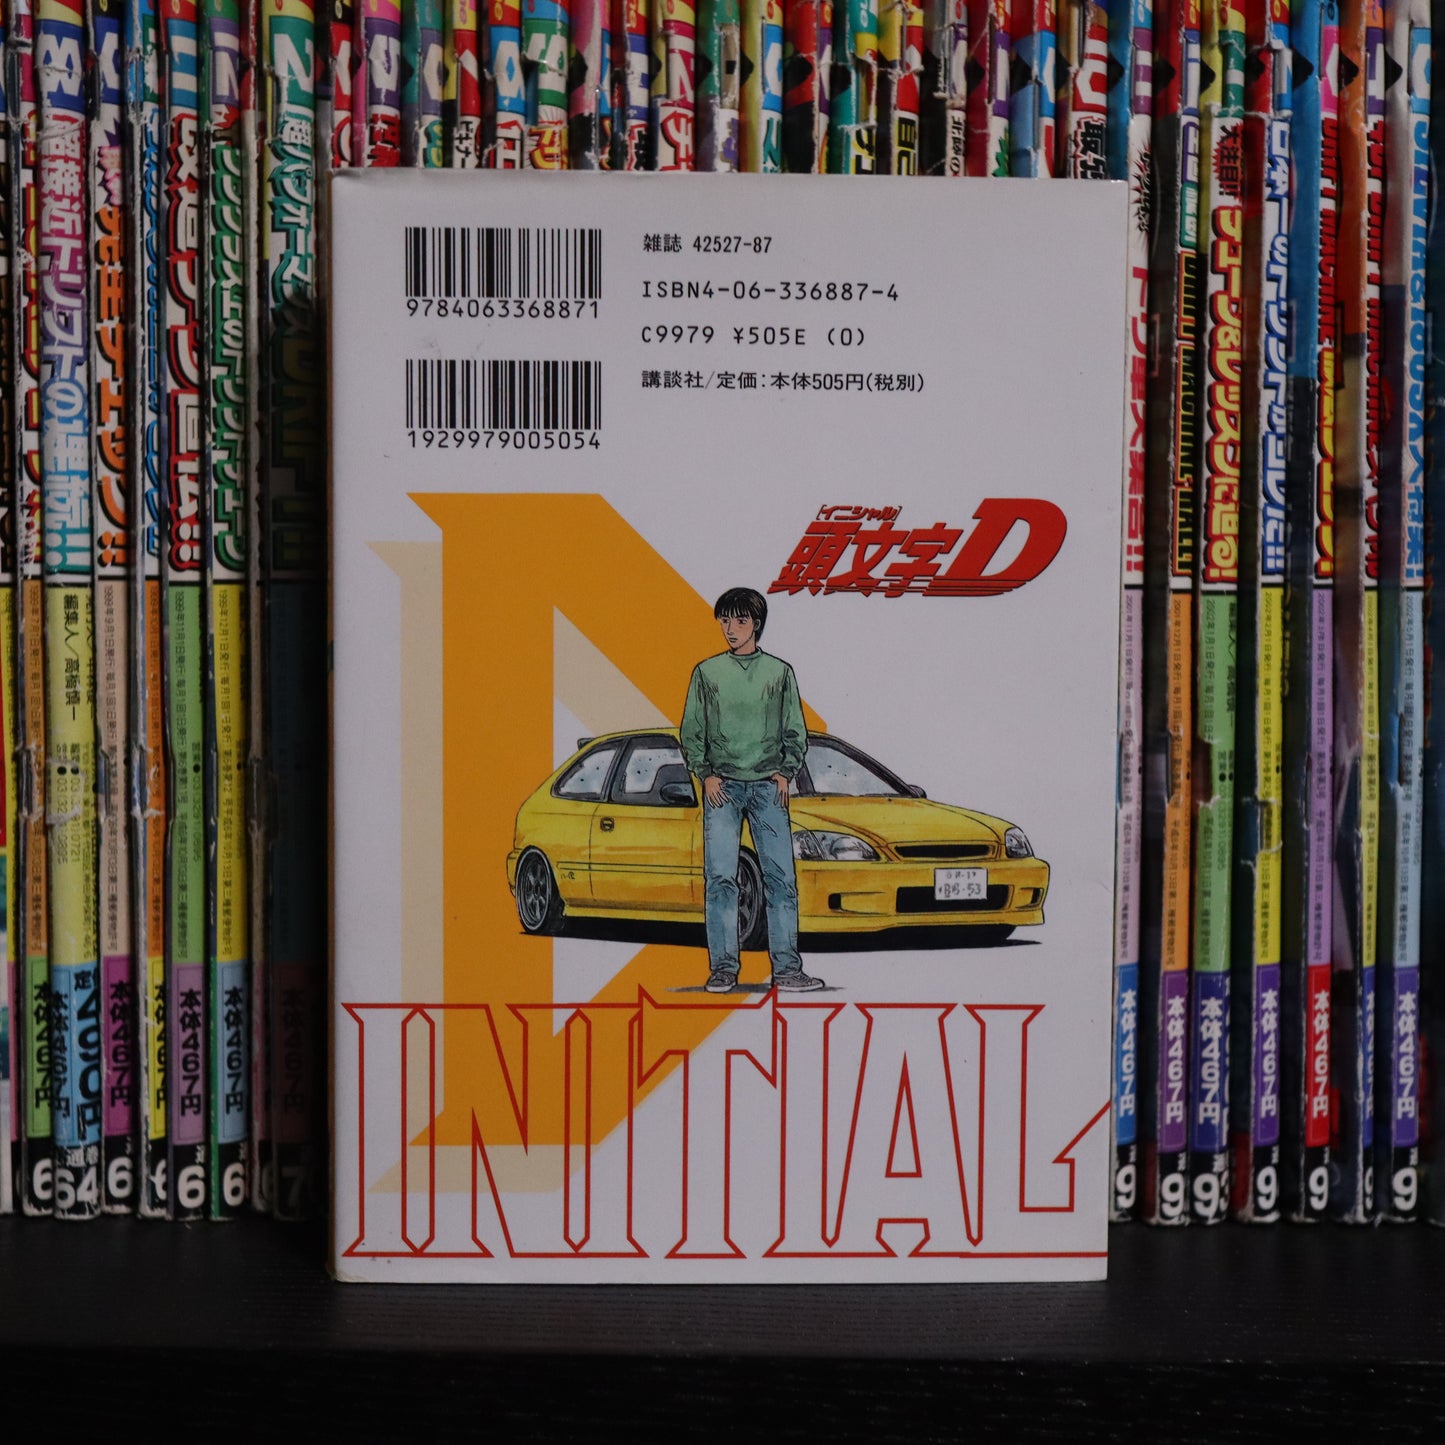 Initial D Manga Volume 19